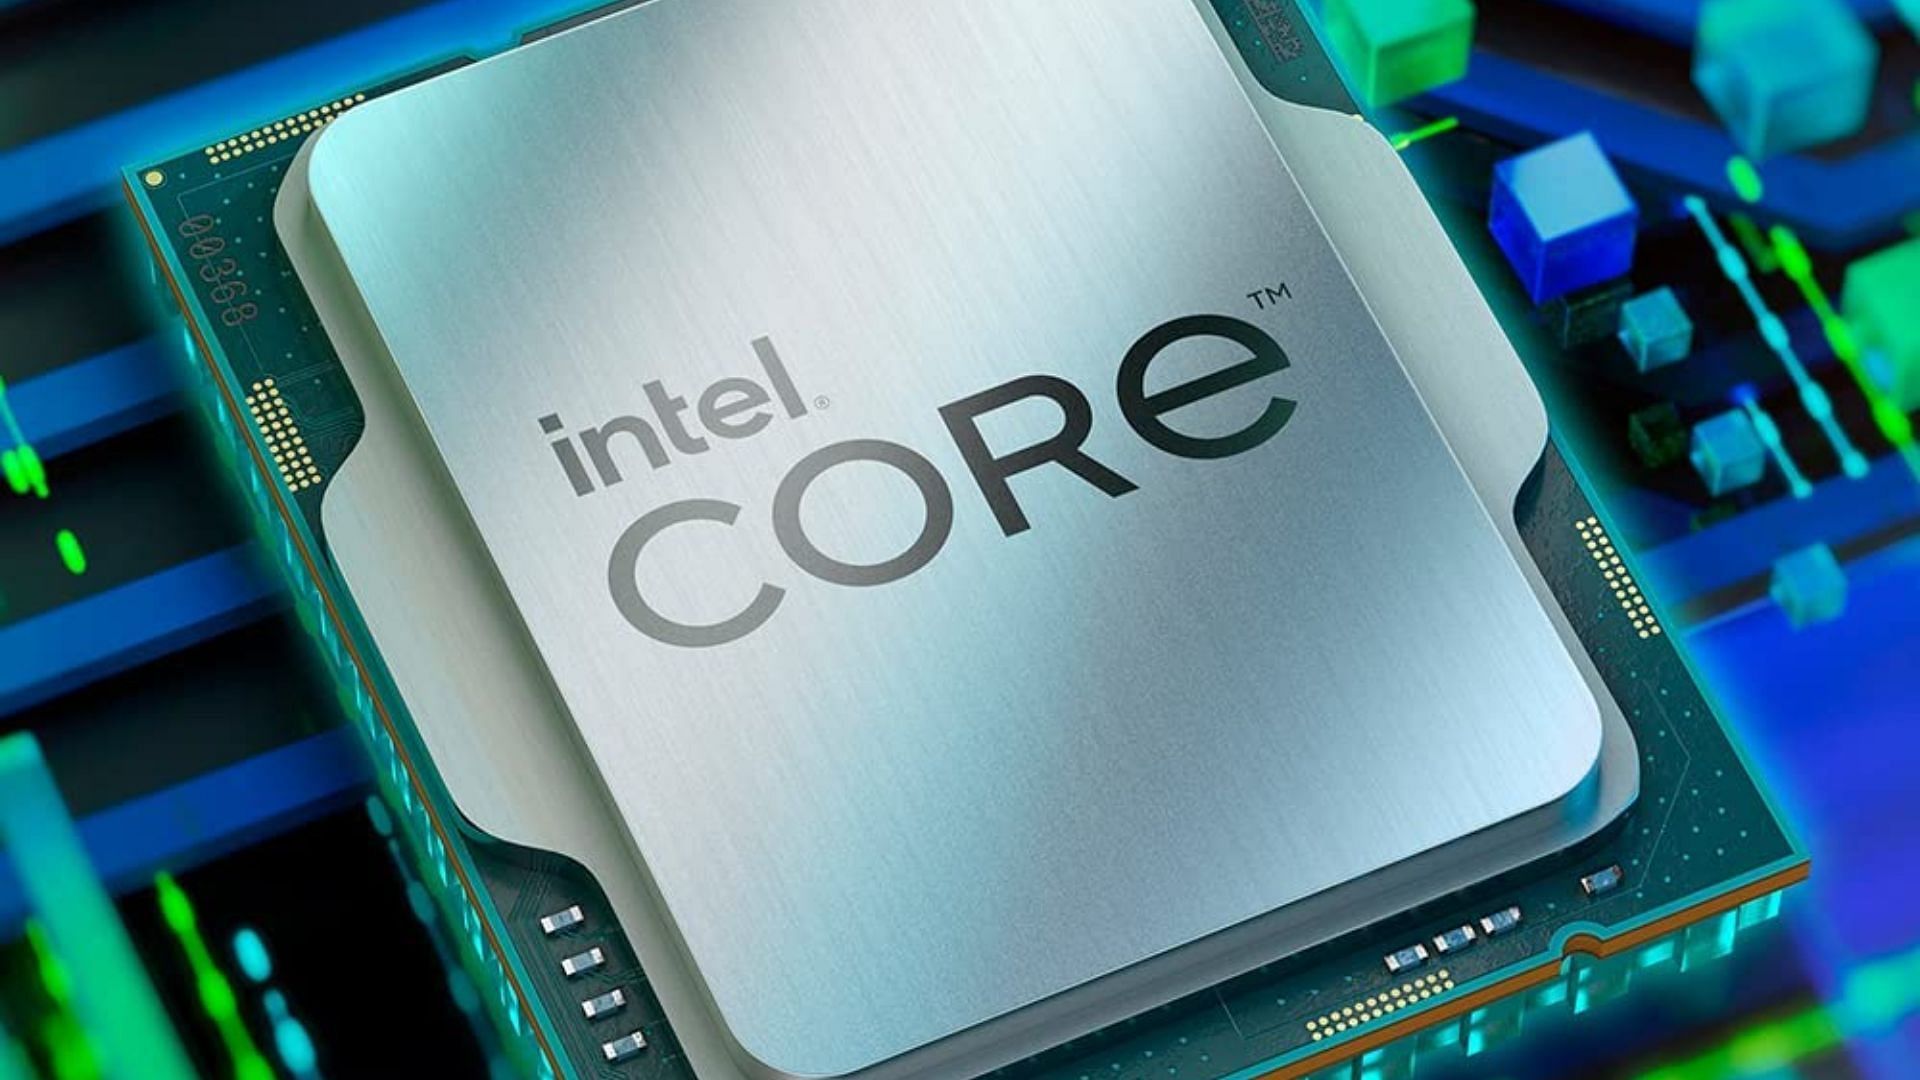 The Intel Core logo (Image via Intel)